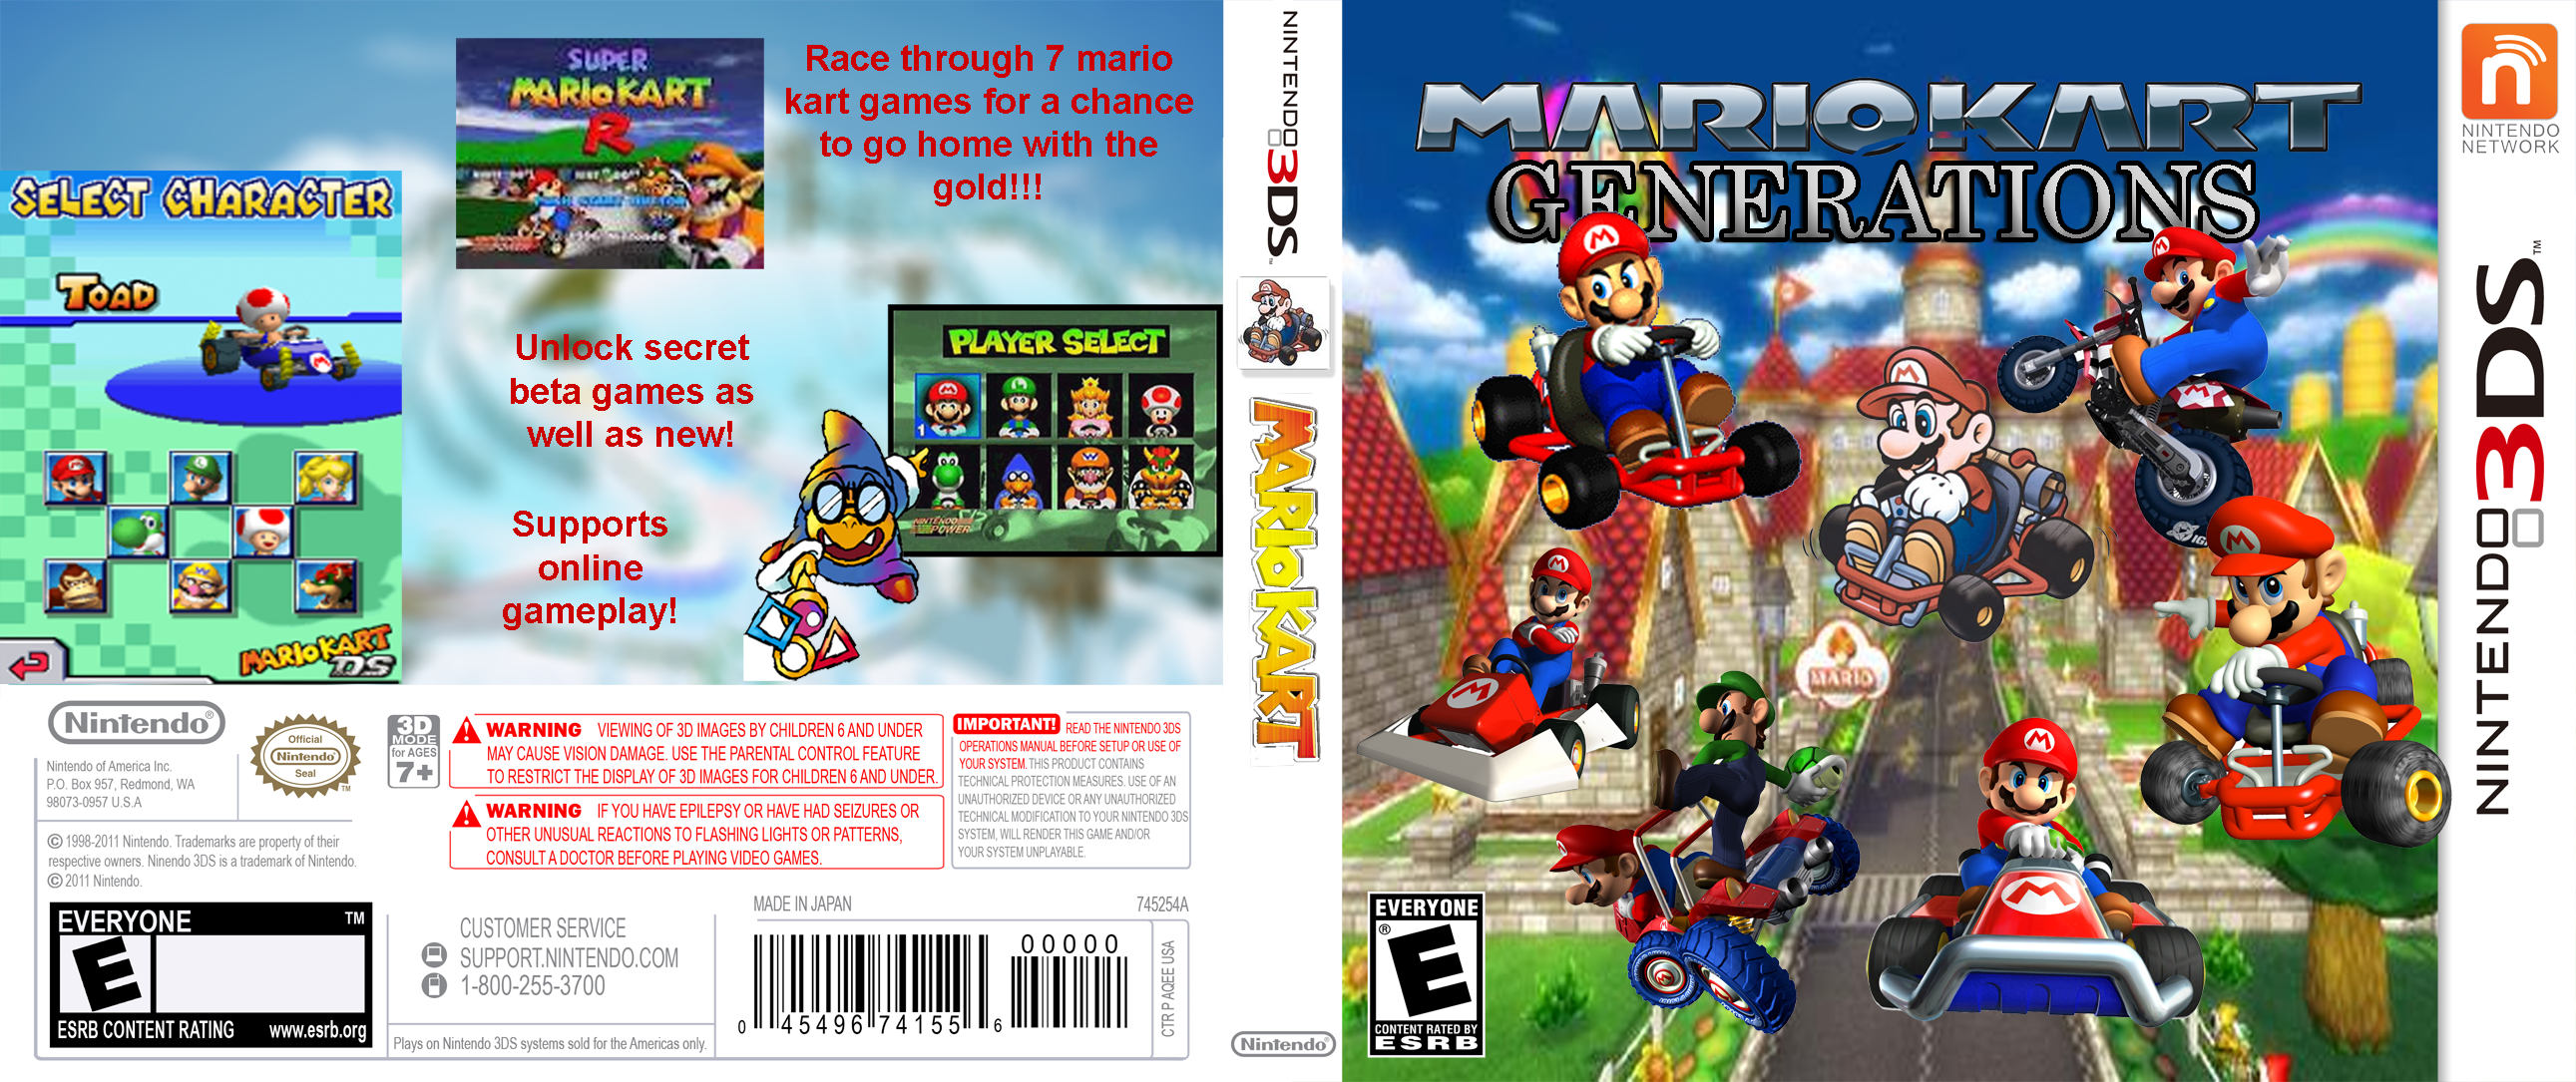 Mario Kart Generations box cover